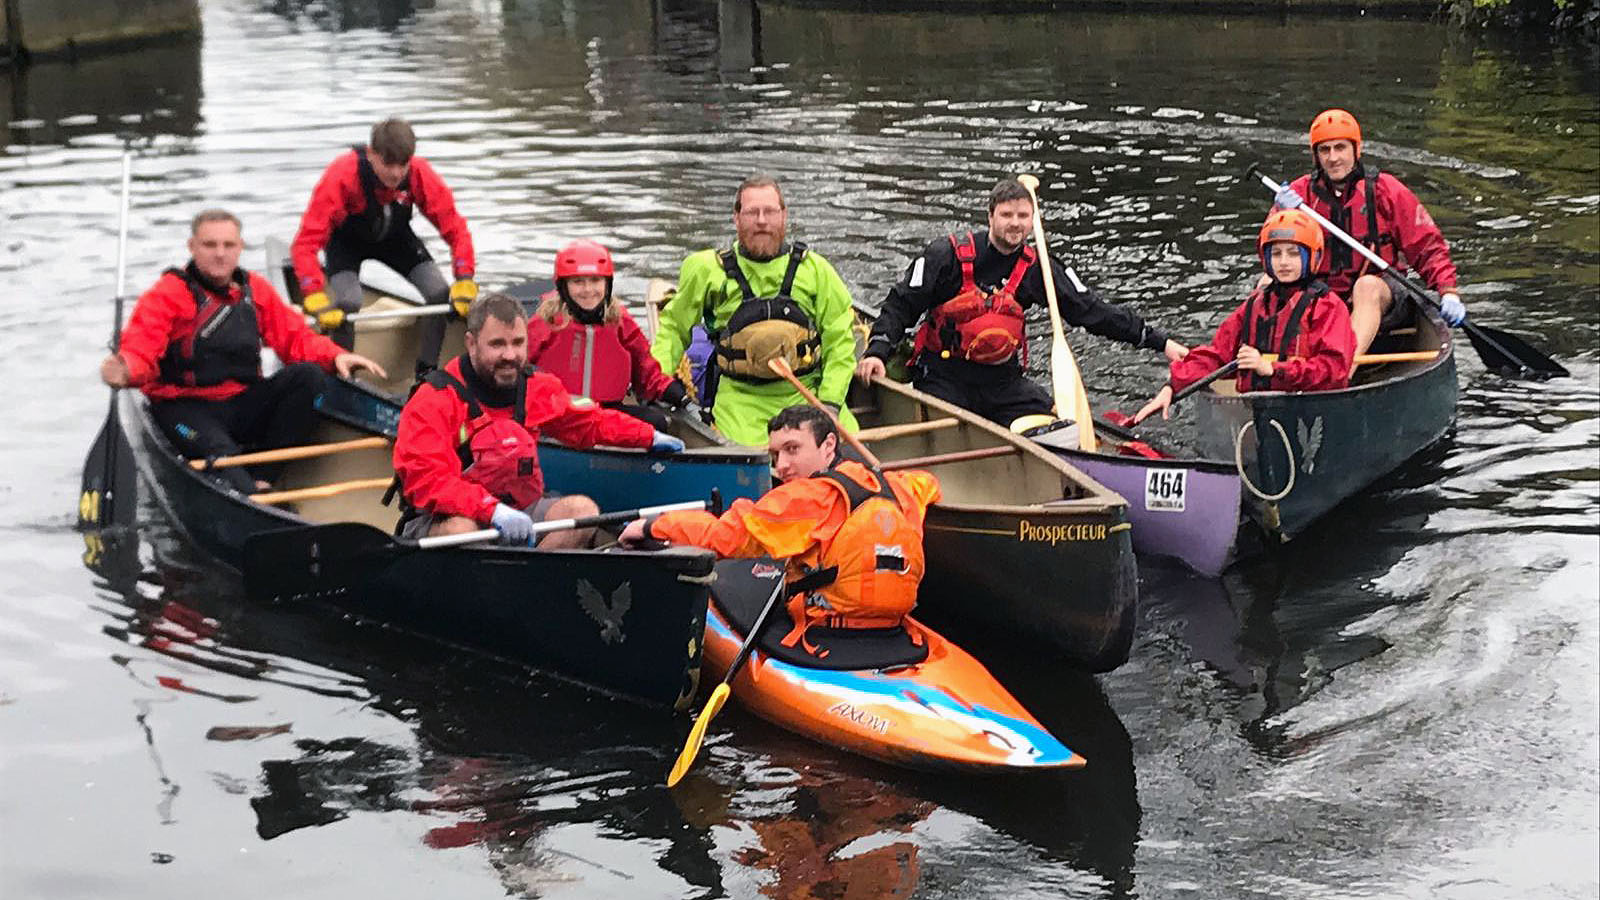 Canoeists Clean Up Mirfield